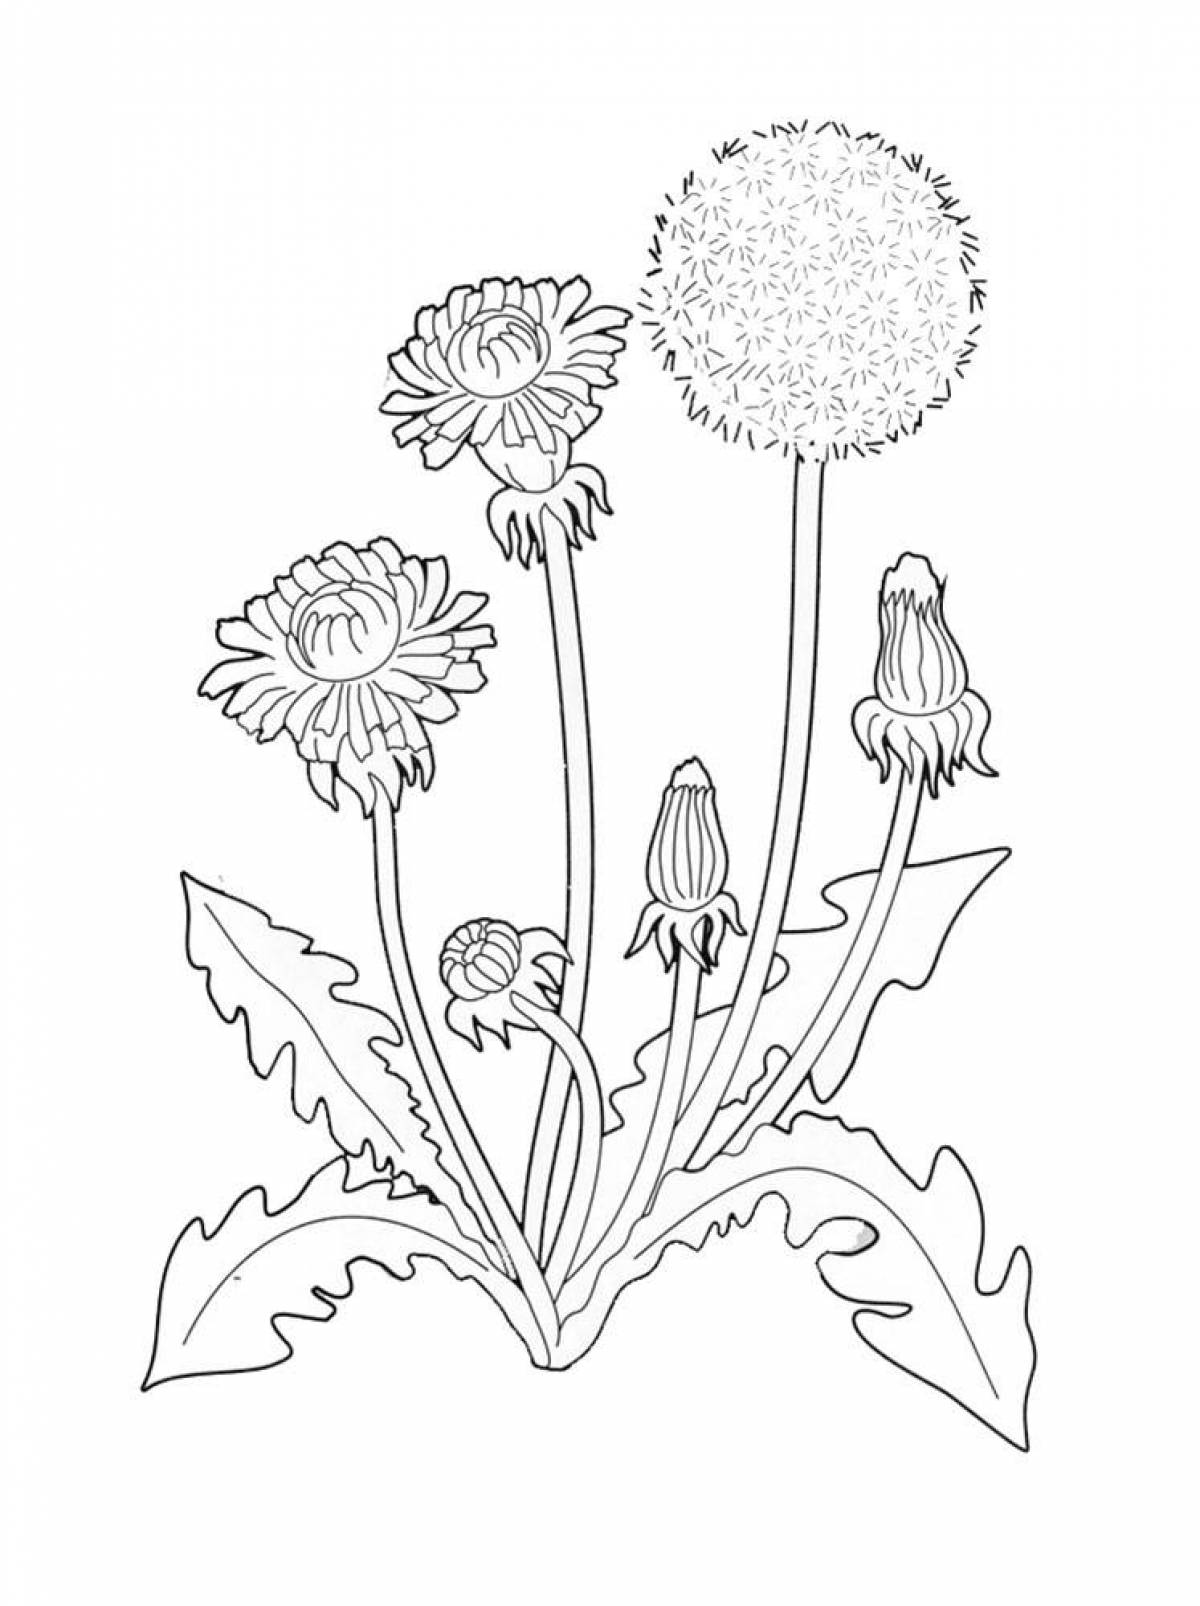 Coloring playful dandelion